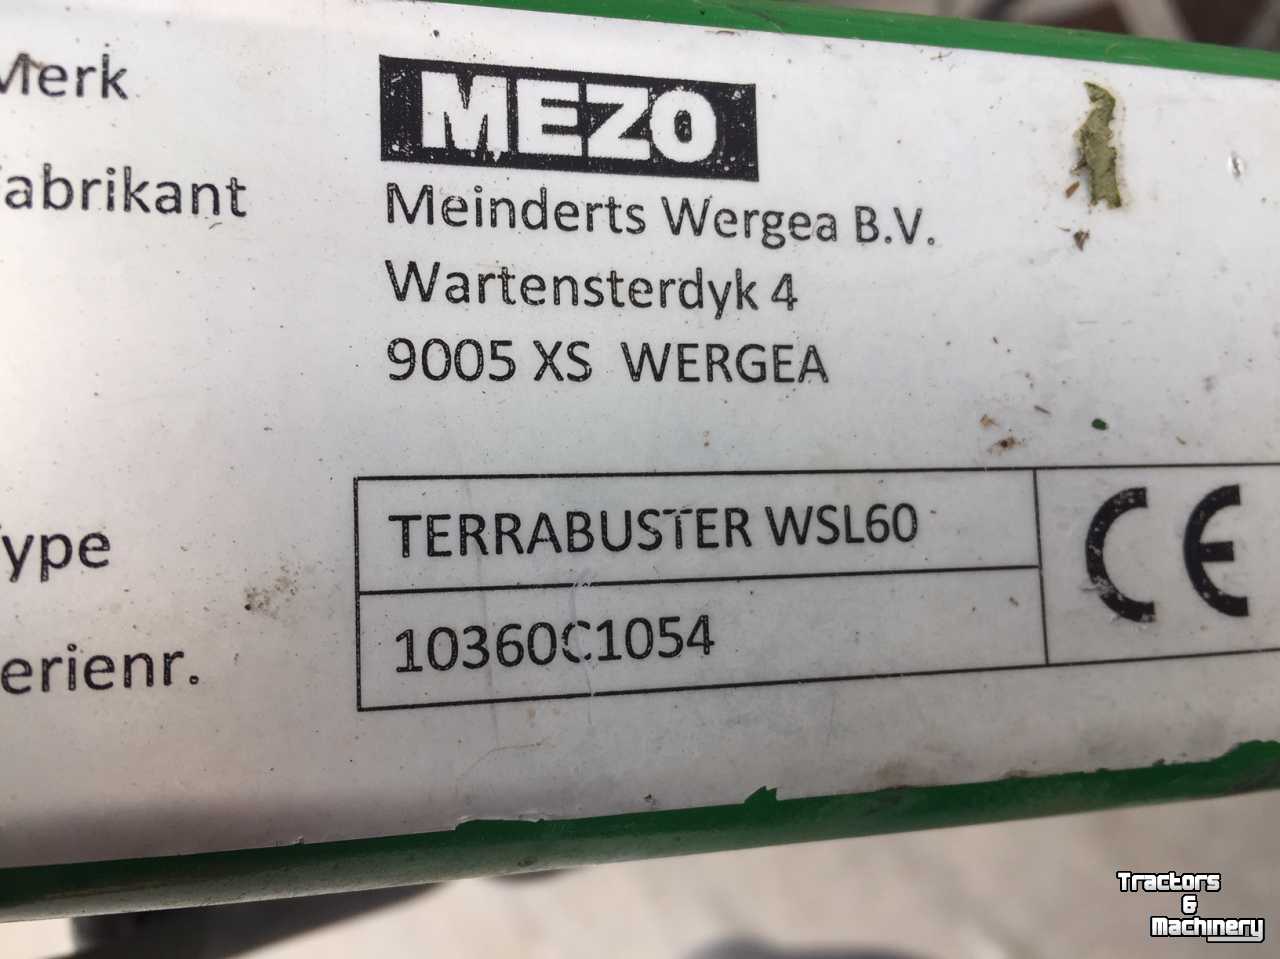 Weidesleep Mezo Terrabuster WSL60